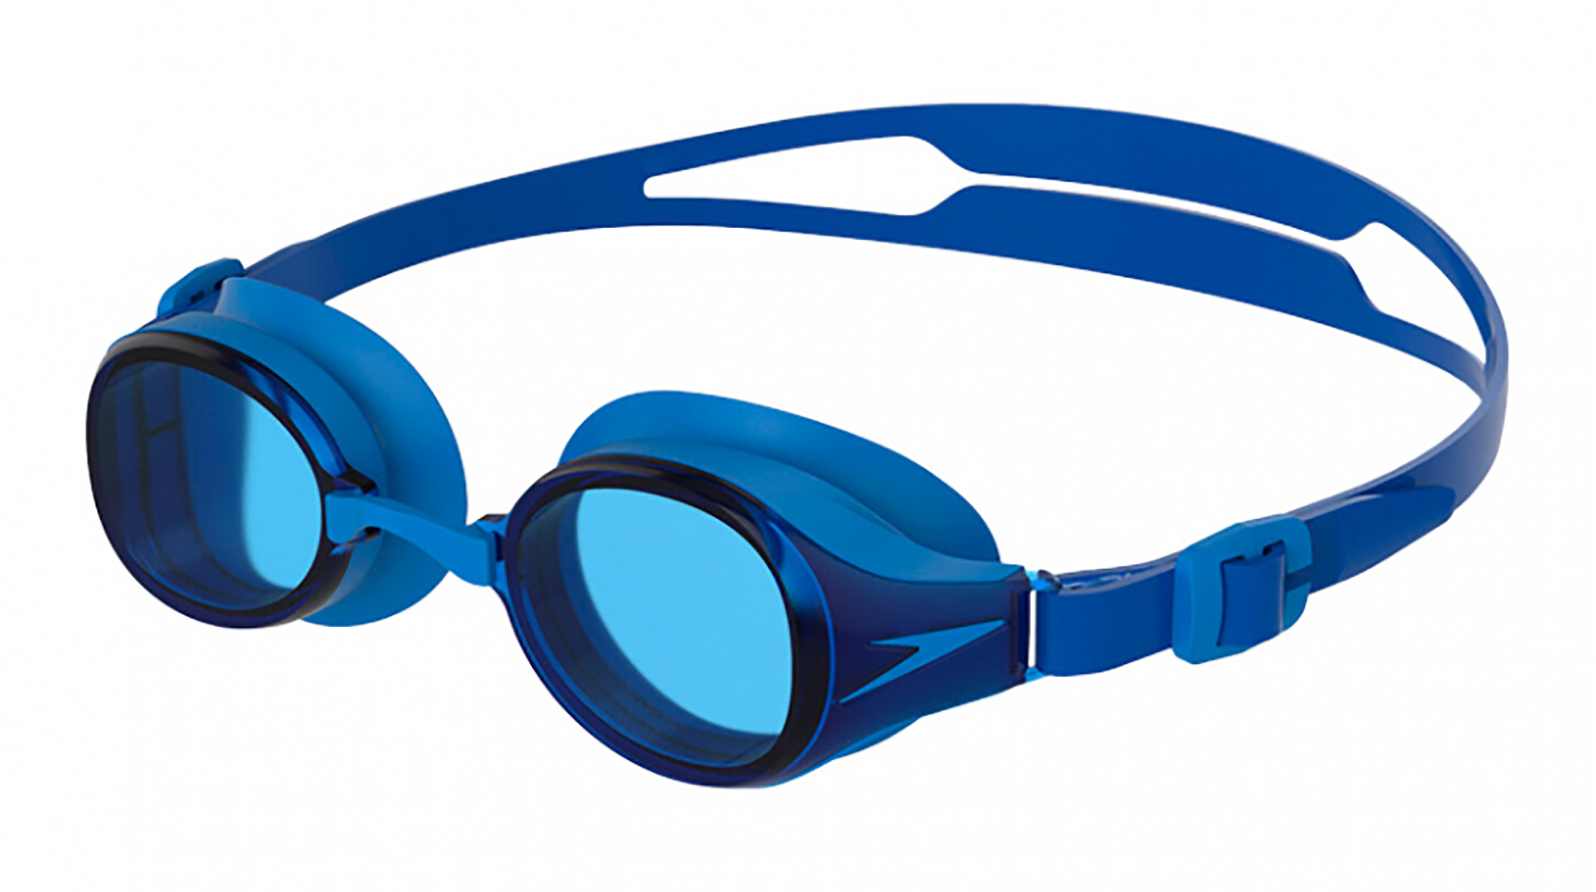 Speedo Очки для плавания Hydropure Optical F809 -5.5 speedo очки для плавания hydropure optical f809 2 5